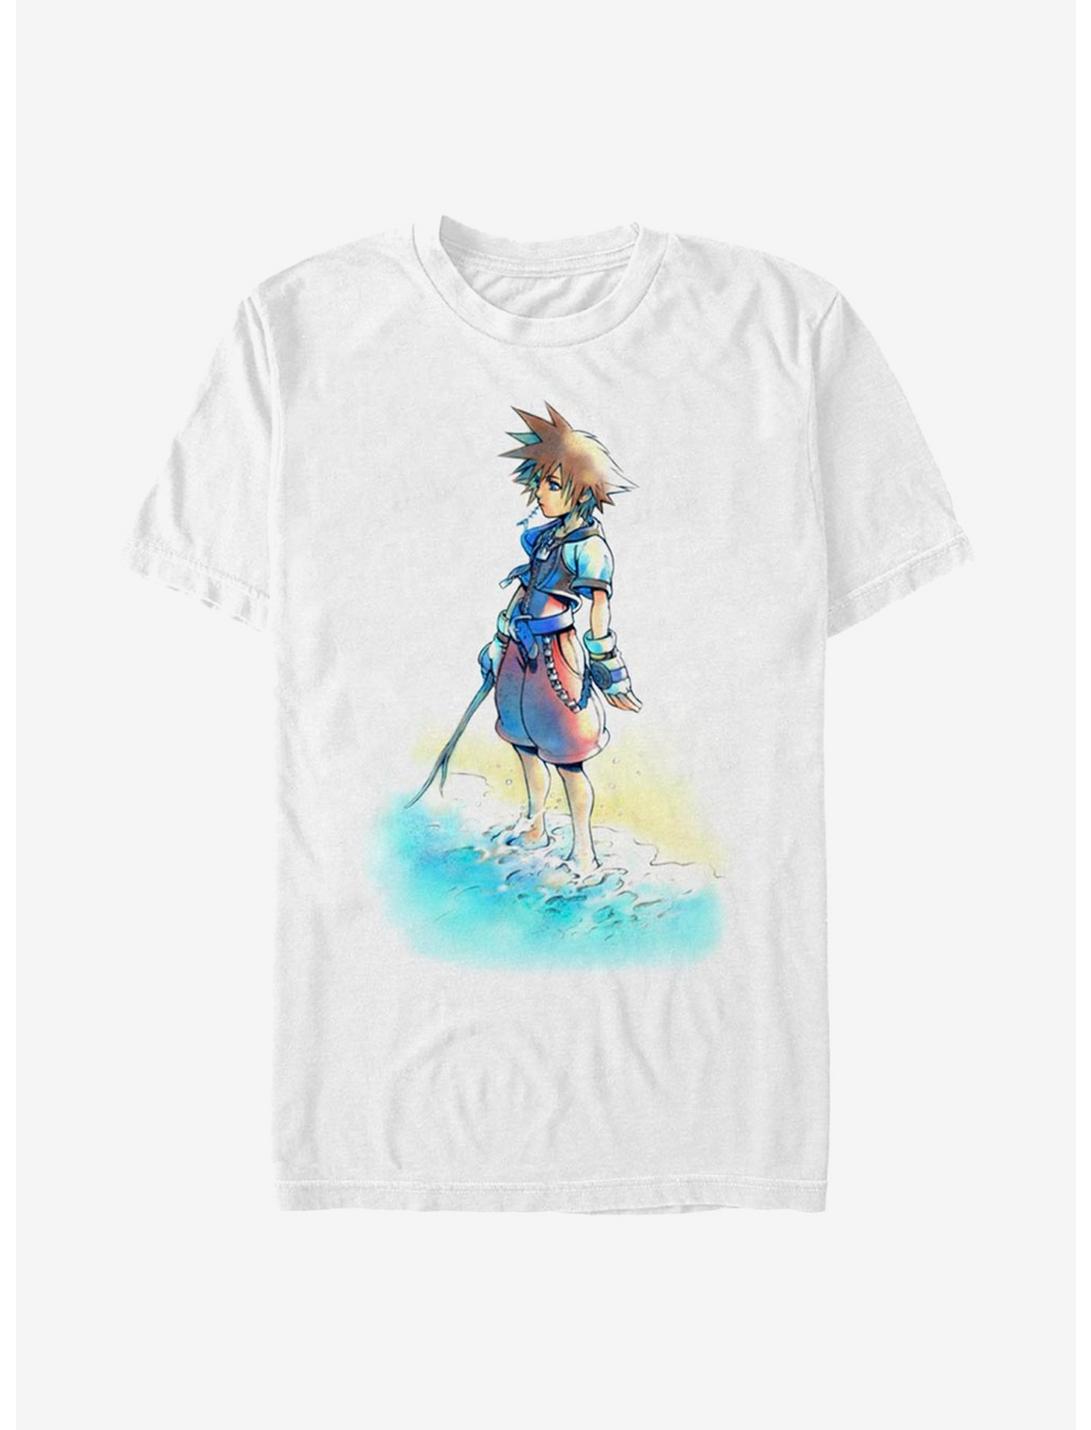 Disney Kingdom Hearts Beach Sora T-Shirt, WHITE, hi-res